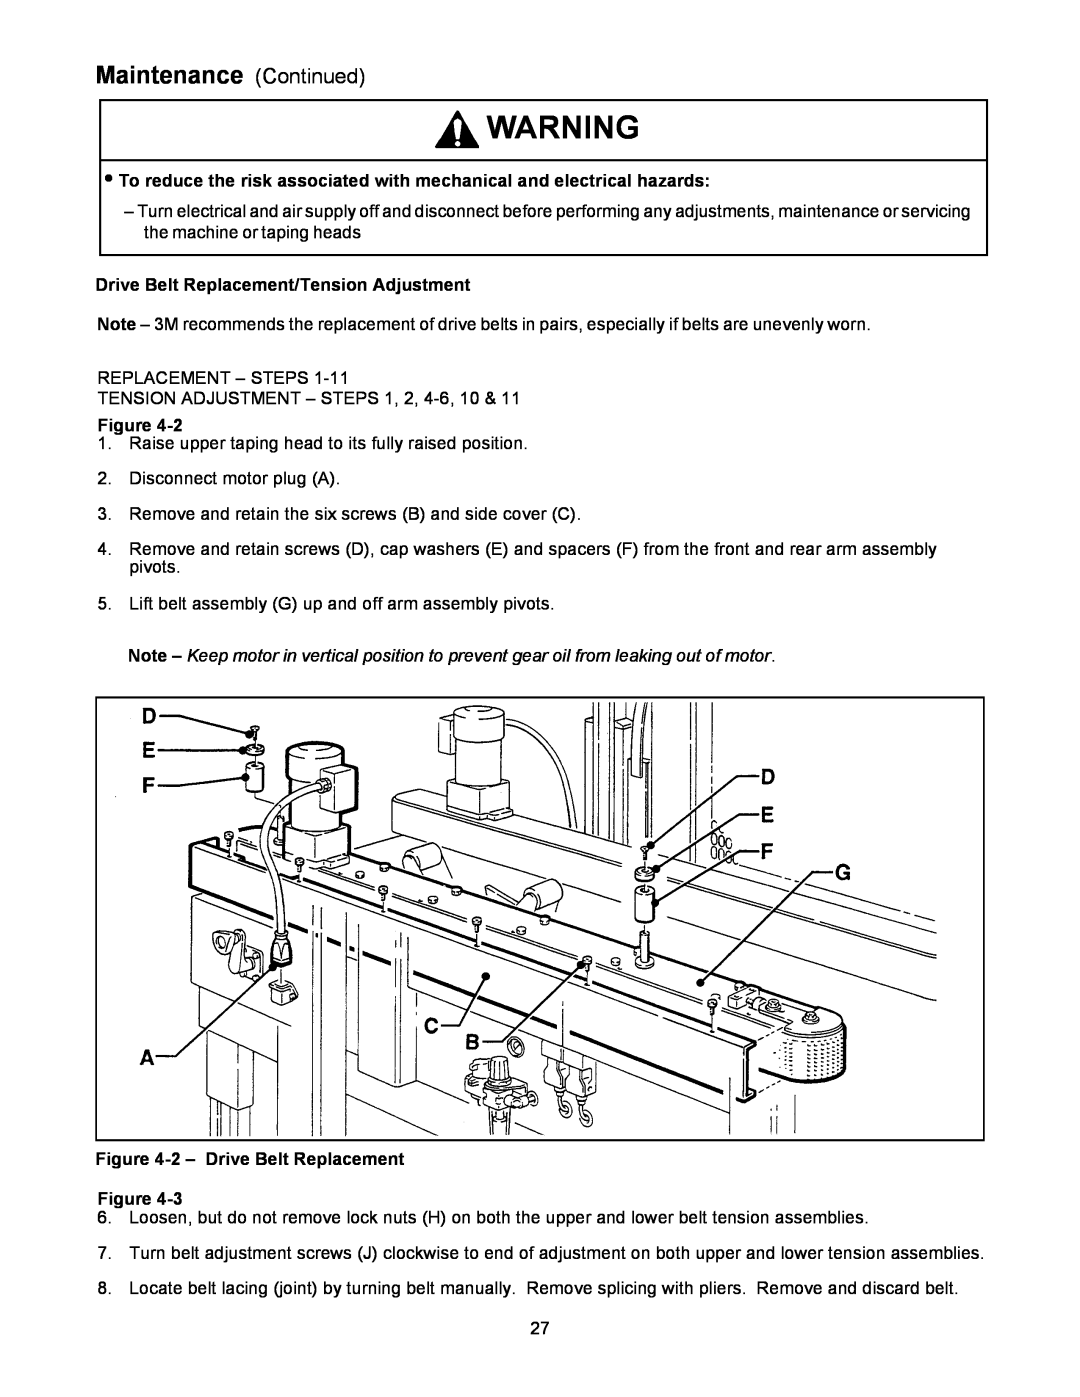 3M 800af-s manual Maintenance Continued, Drive Belt Replacement/Tension Adjustment, 2– Drive Belt Replacement Figure 